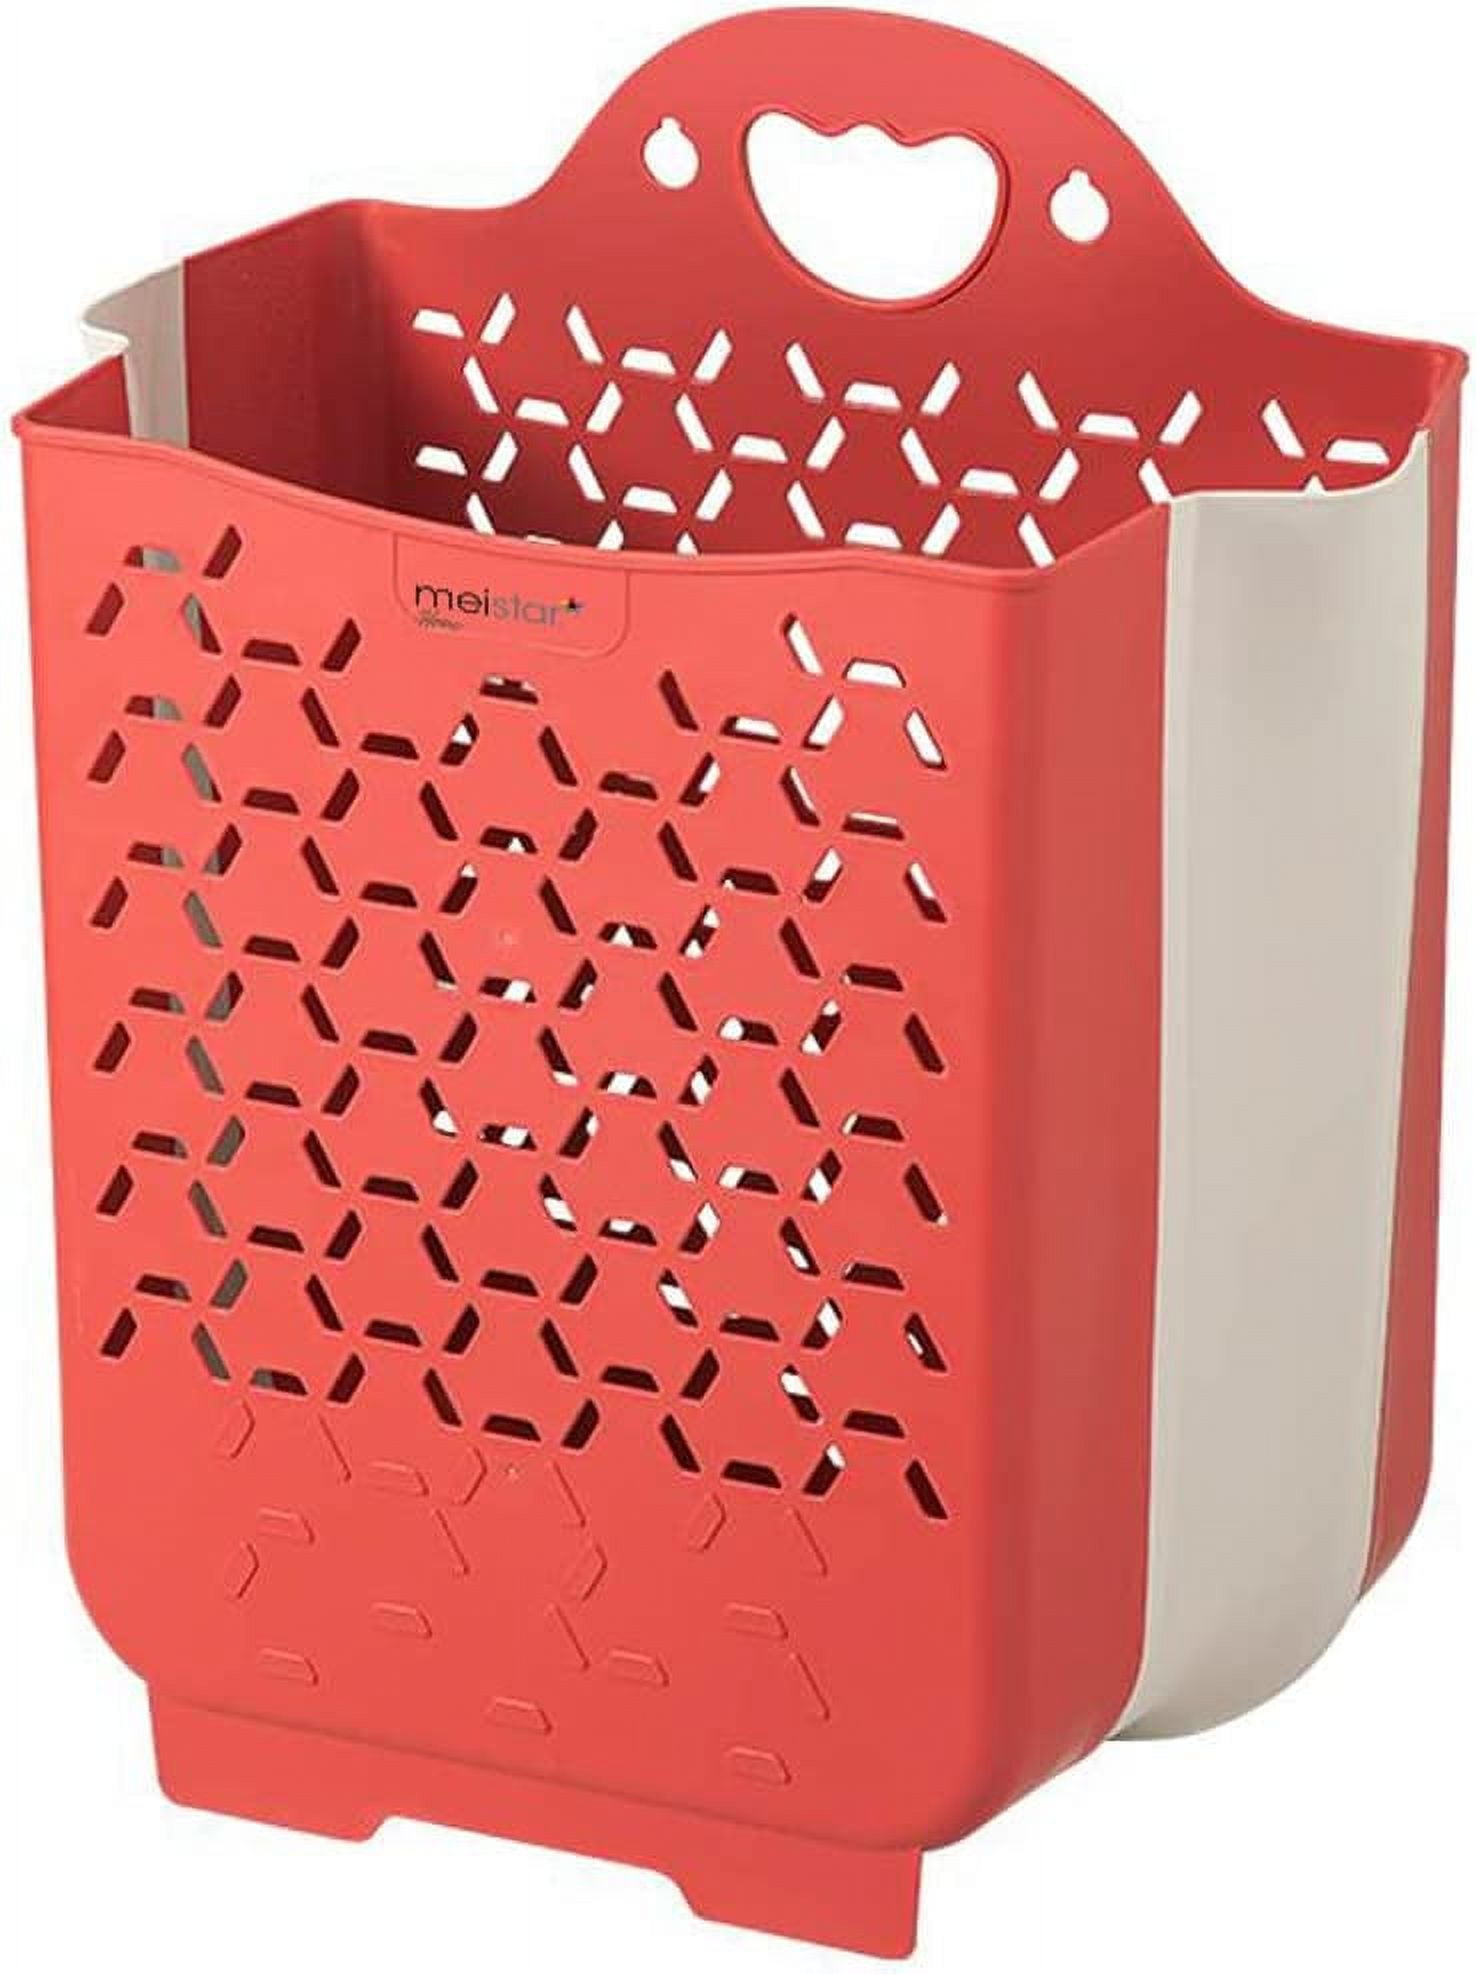 Homeika 42L (11 Gallon) Collapsible Plastic Laundry Basket - Foldable Pop up  Storage Container/Organizer - Portable Washing Tub - Space Saving Hamper/ Basket，White/Gray 